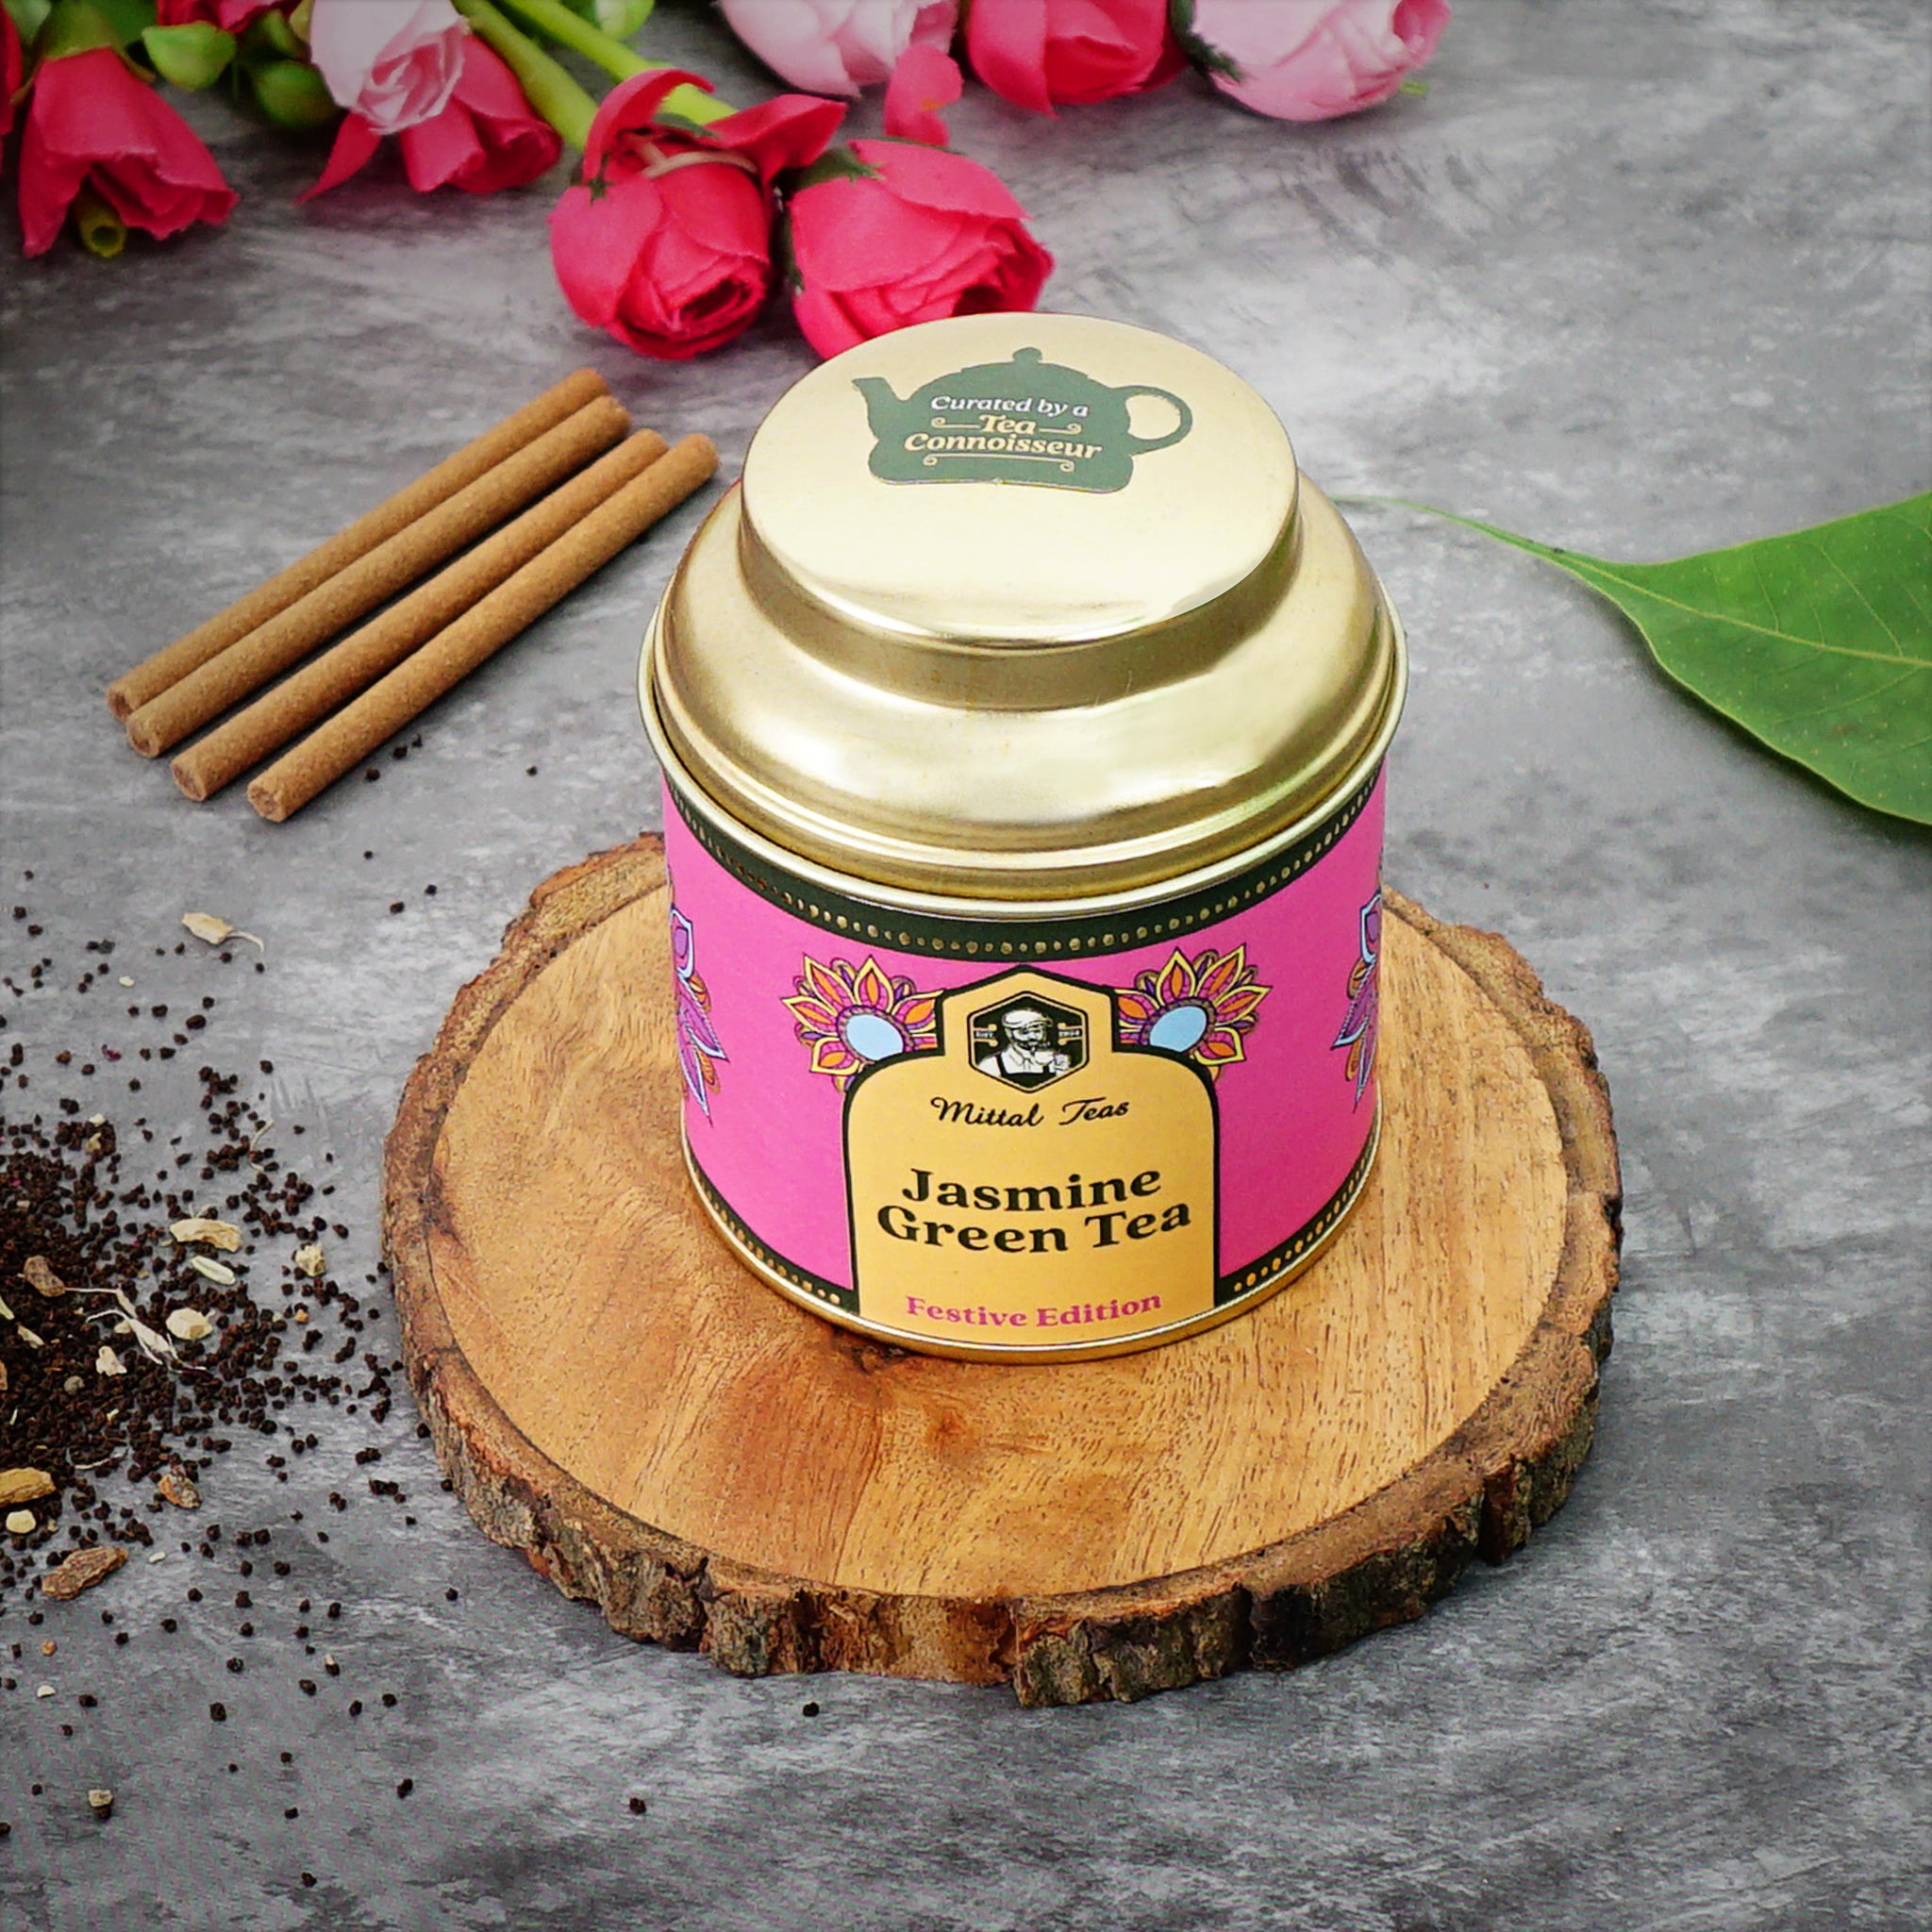 Jasmine Green Tea | 30g | Festive Edition - Mittal Teas